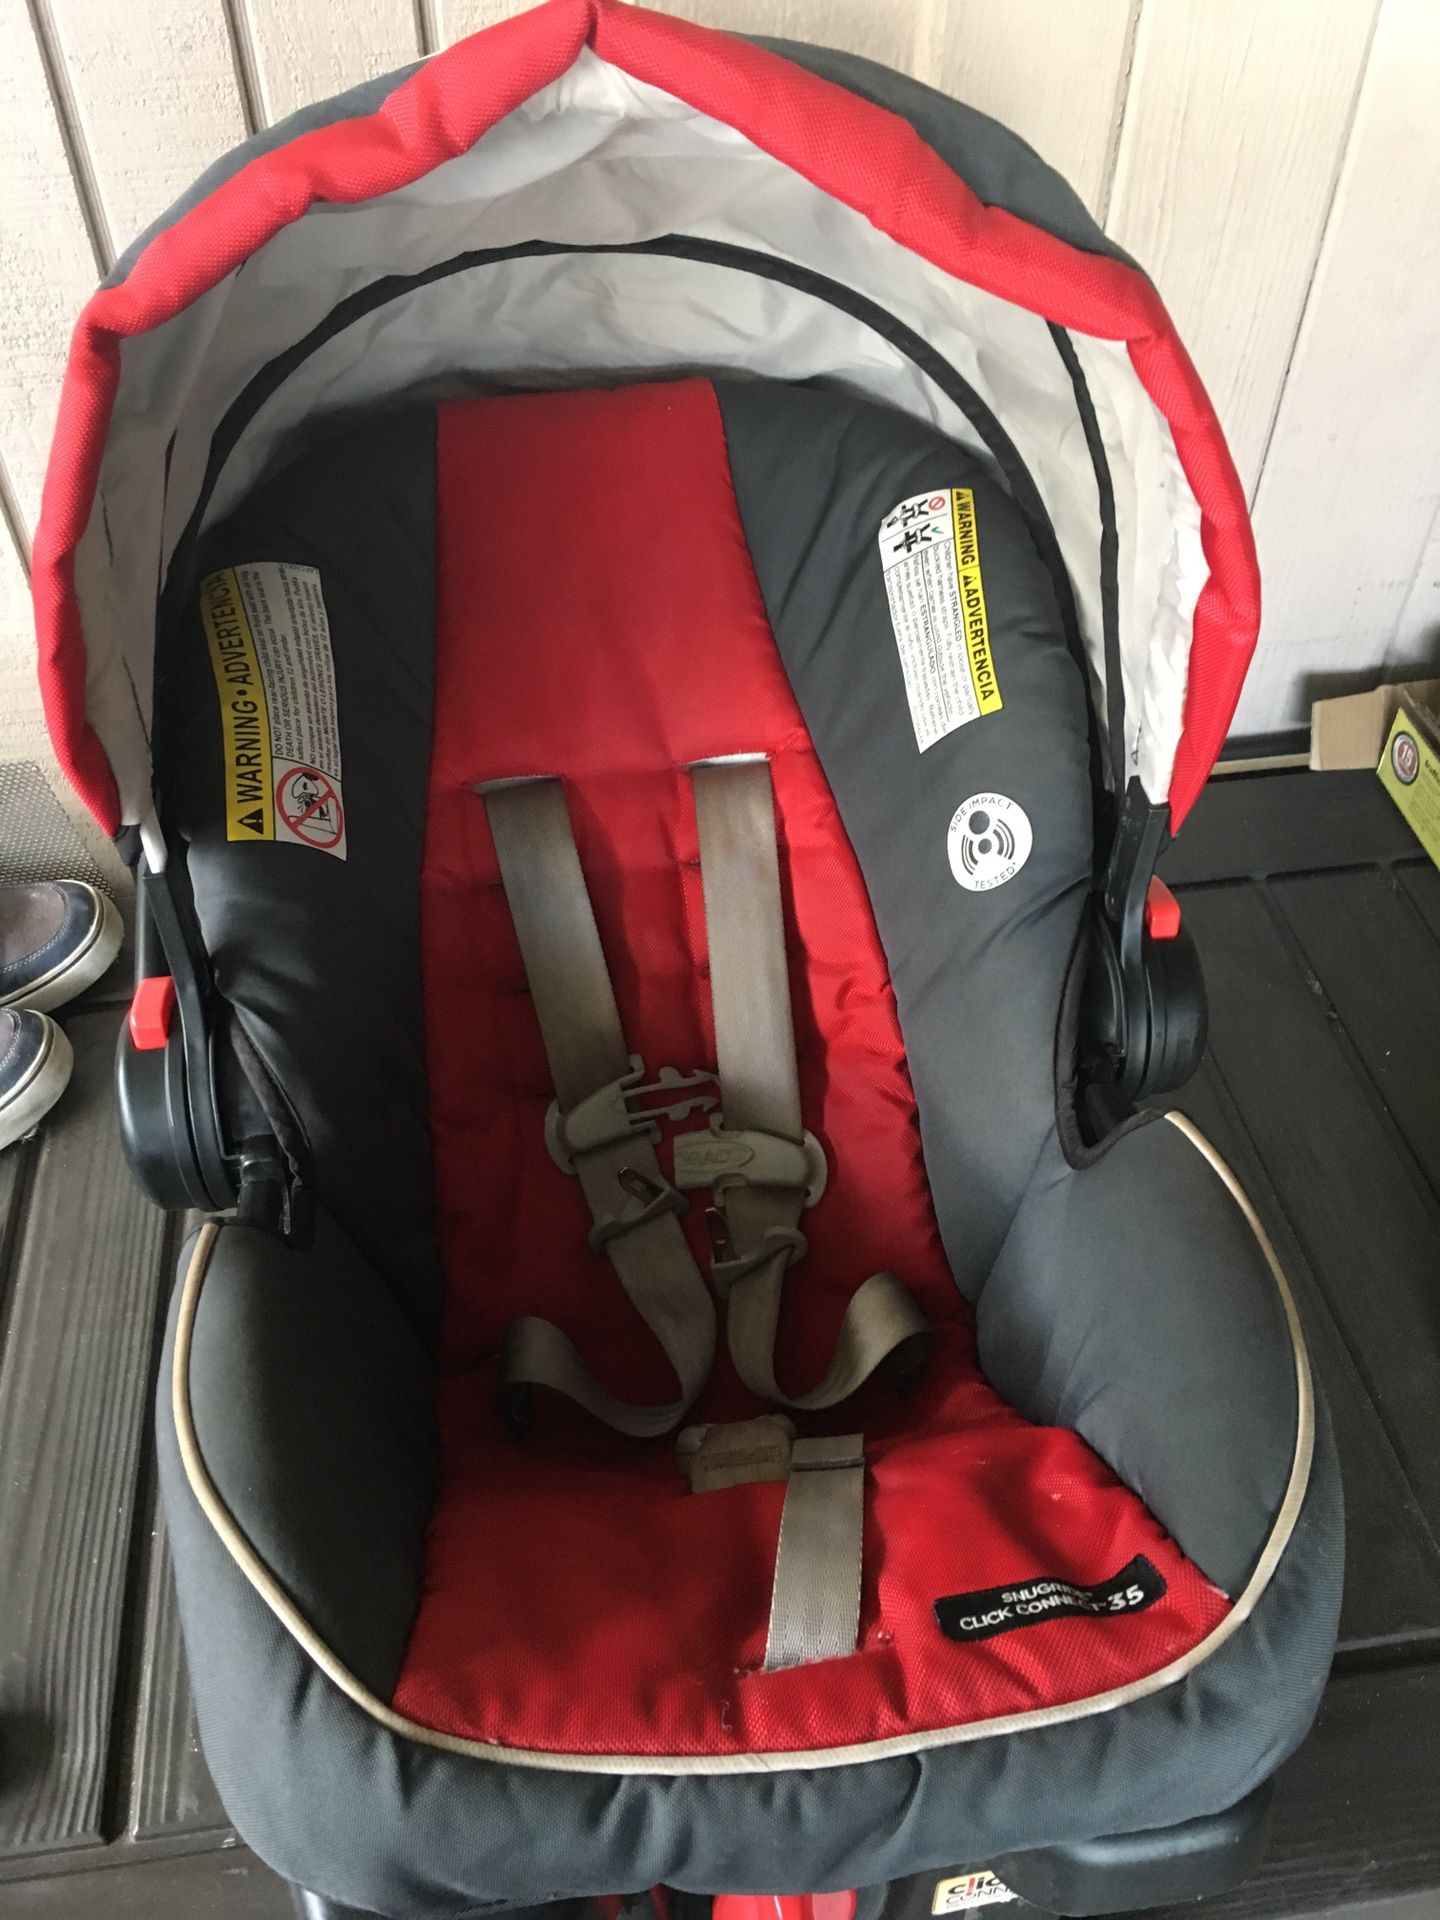 Graco rear-facing infant car seat